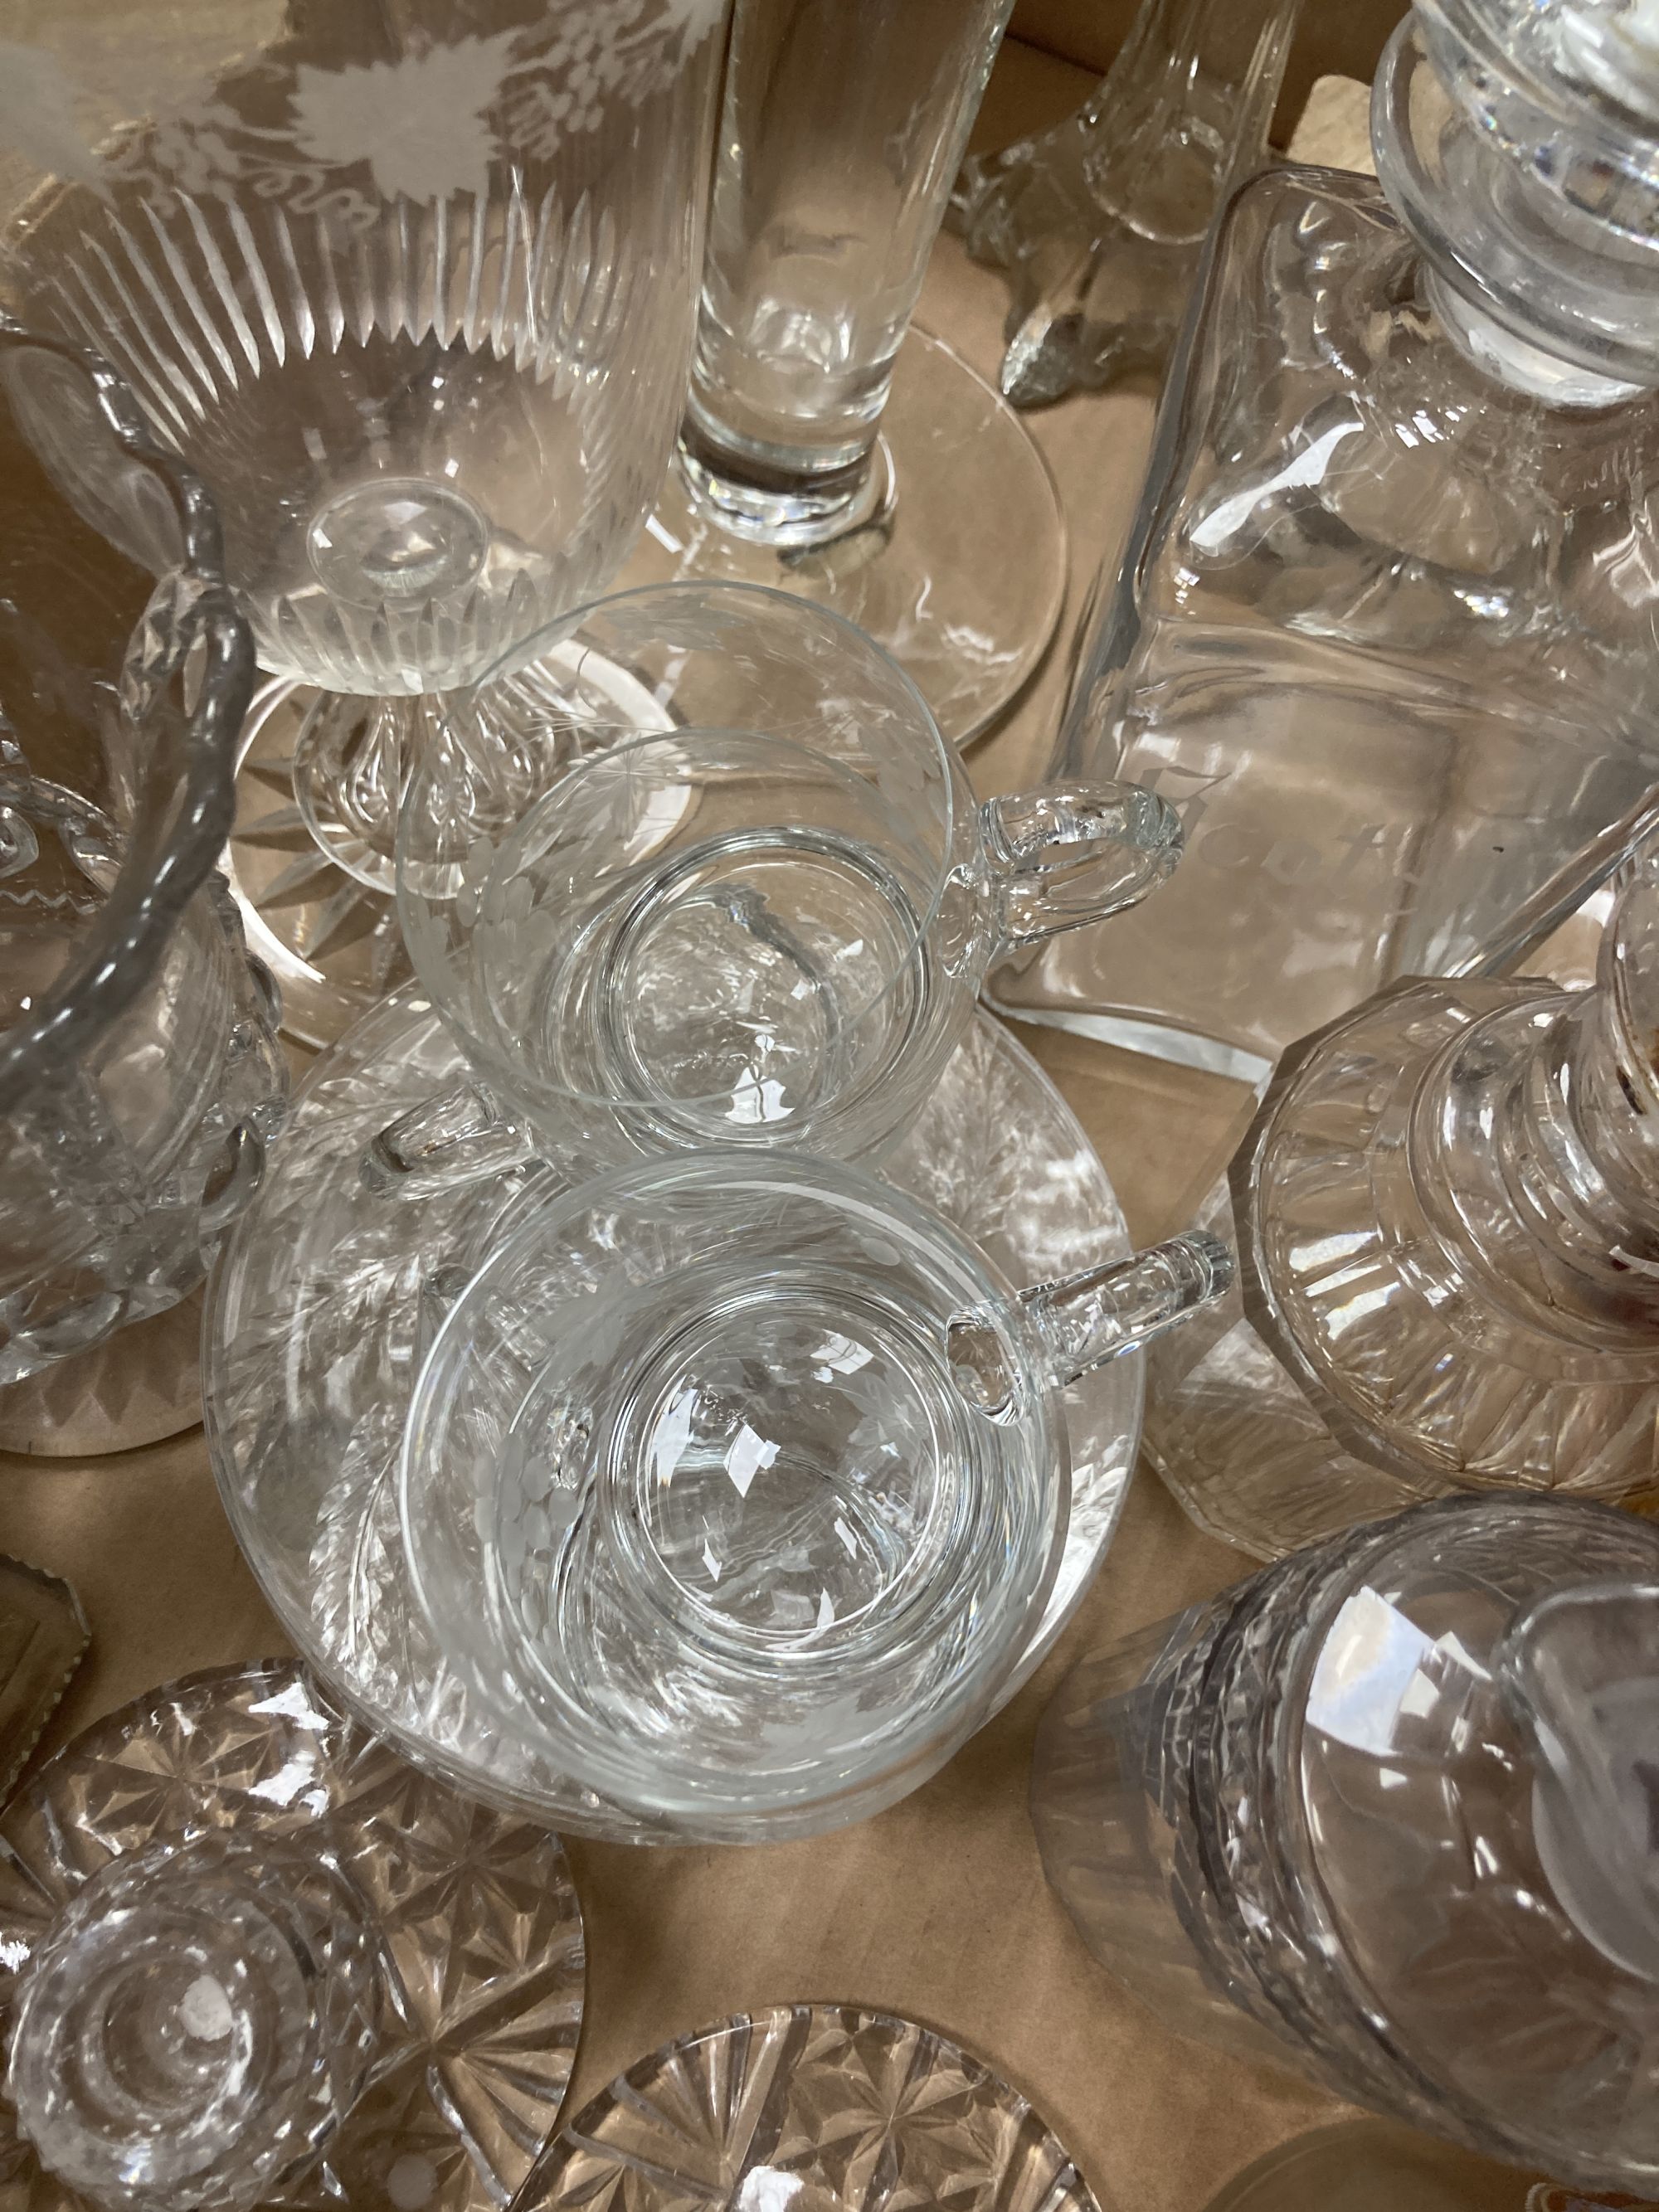 A quantity of mixed glassware, decanters, vases, etc.